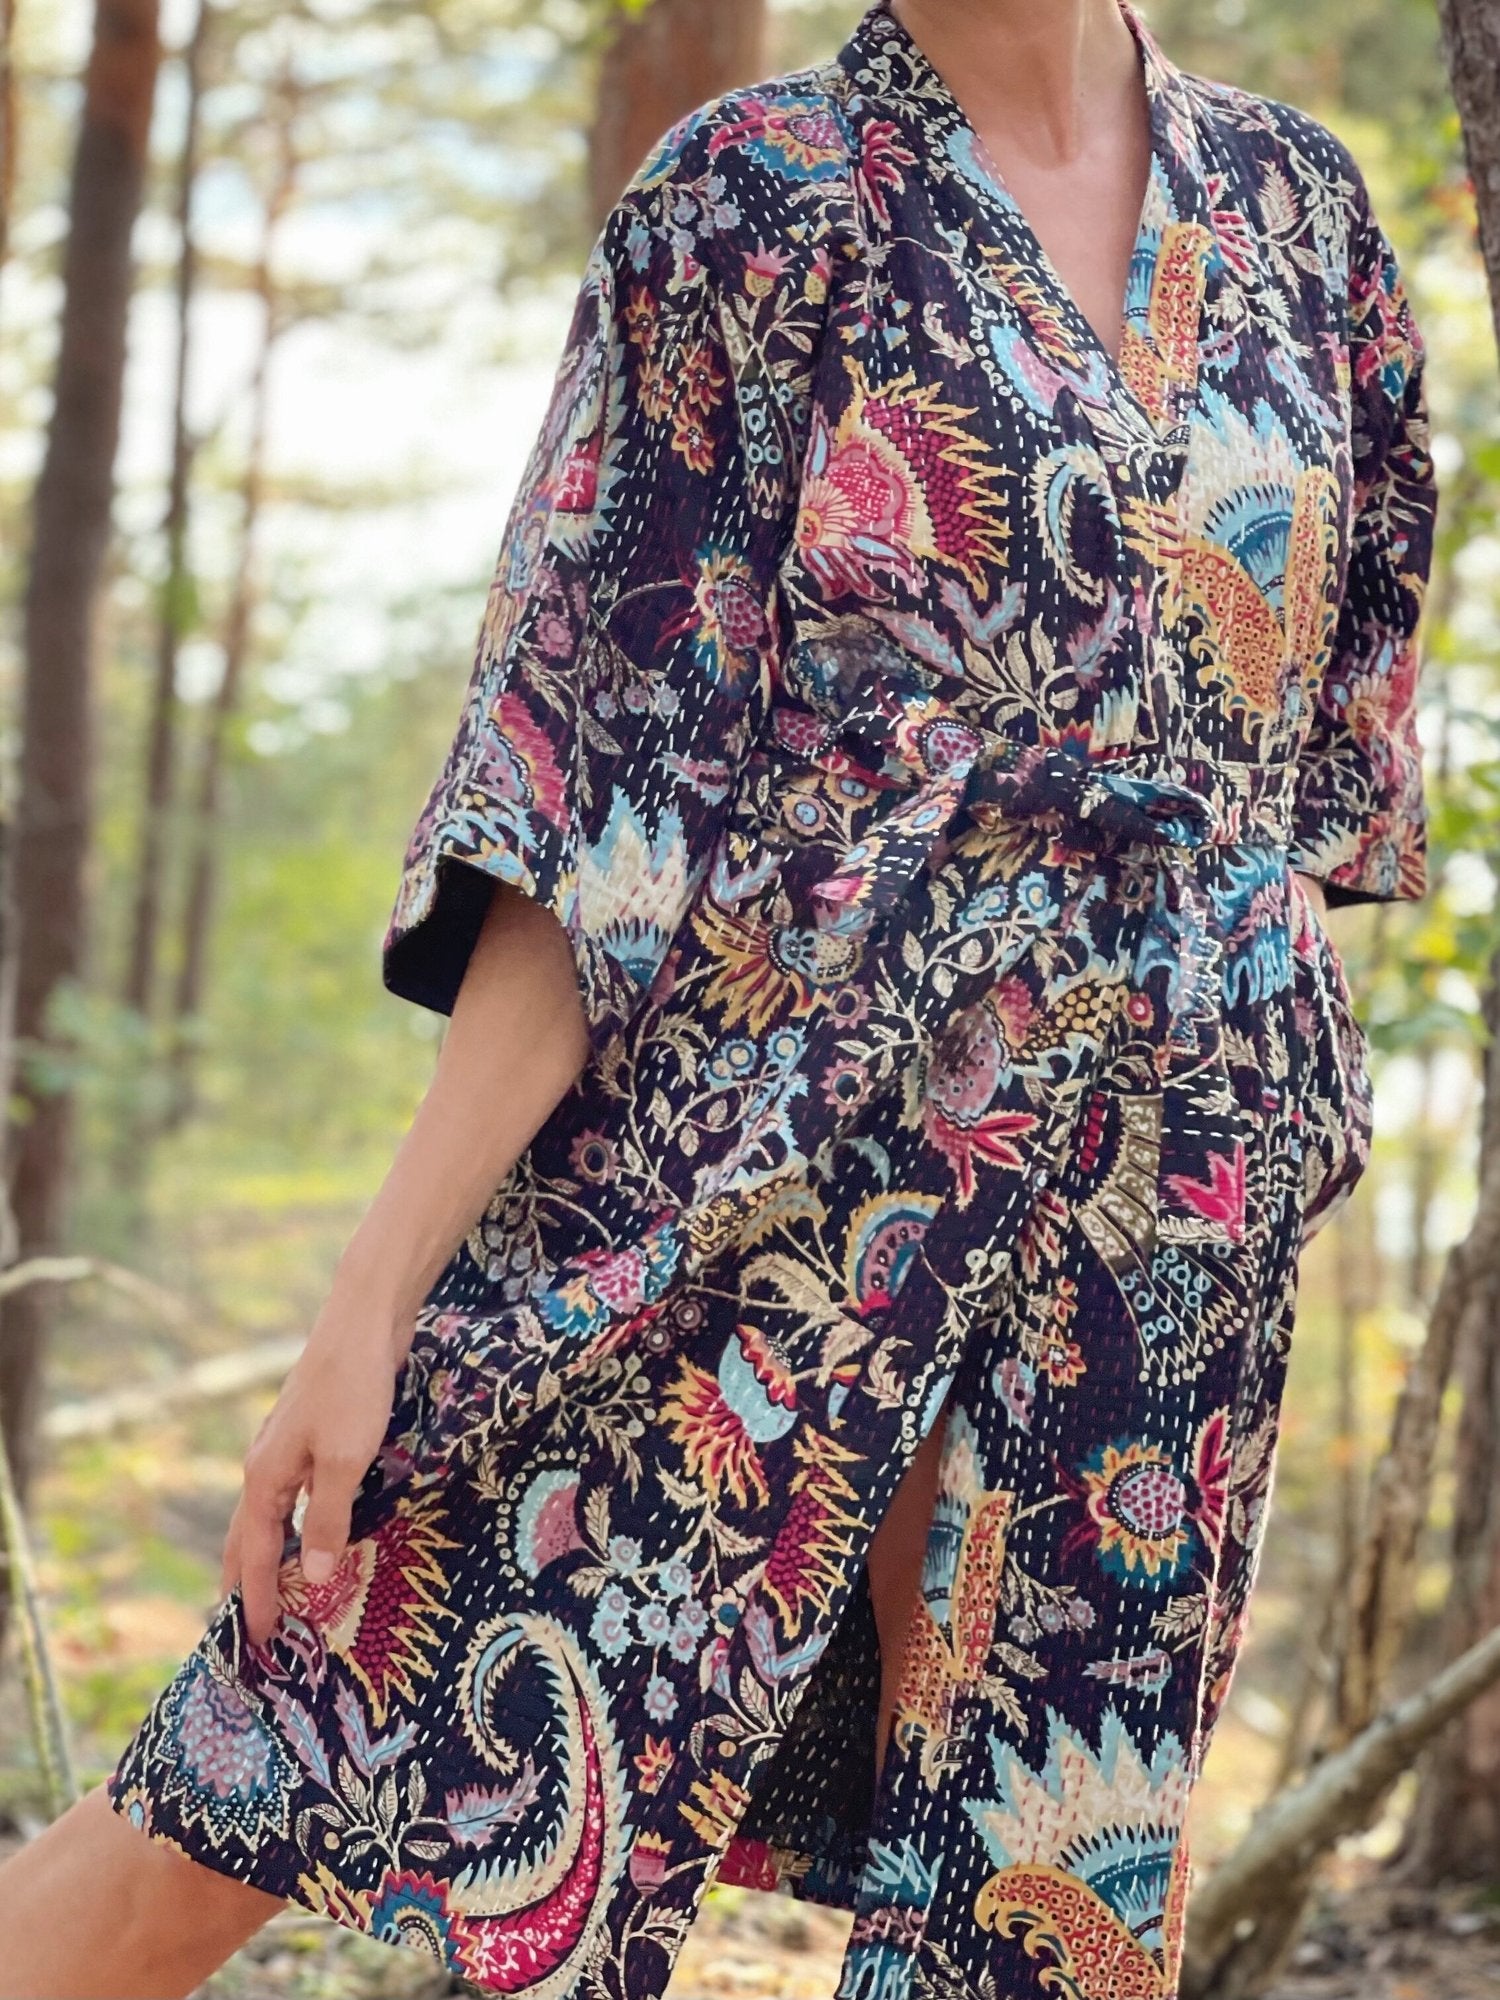 Kimono | Kantha Quilt